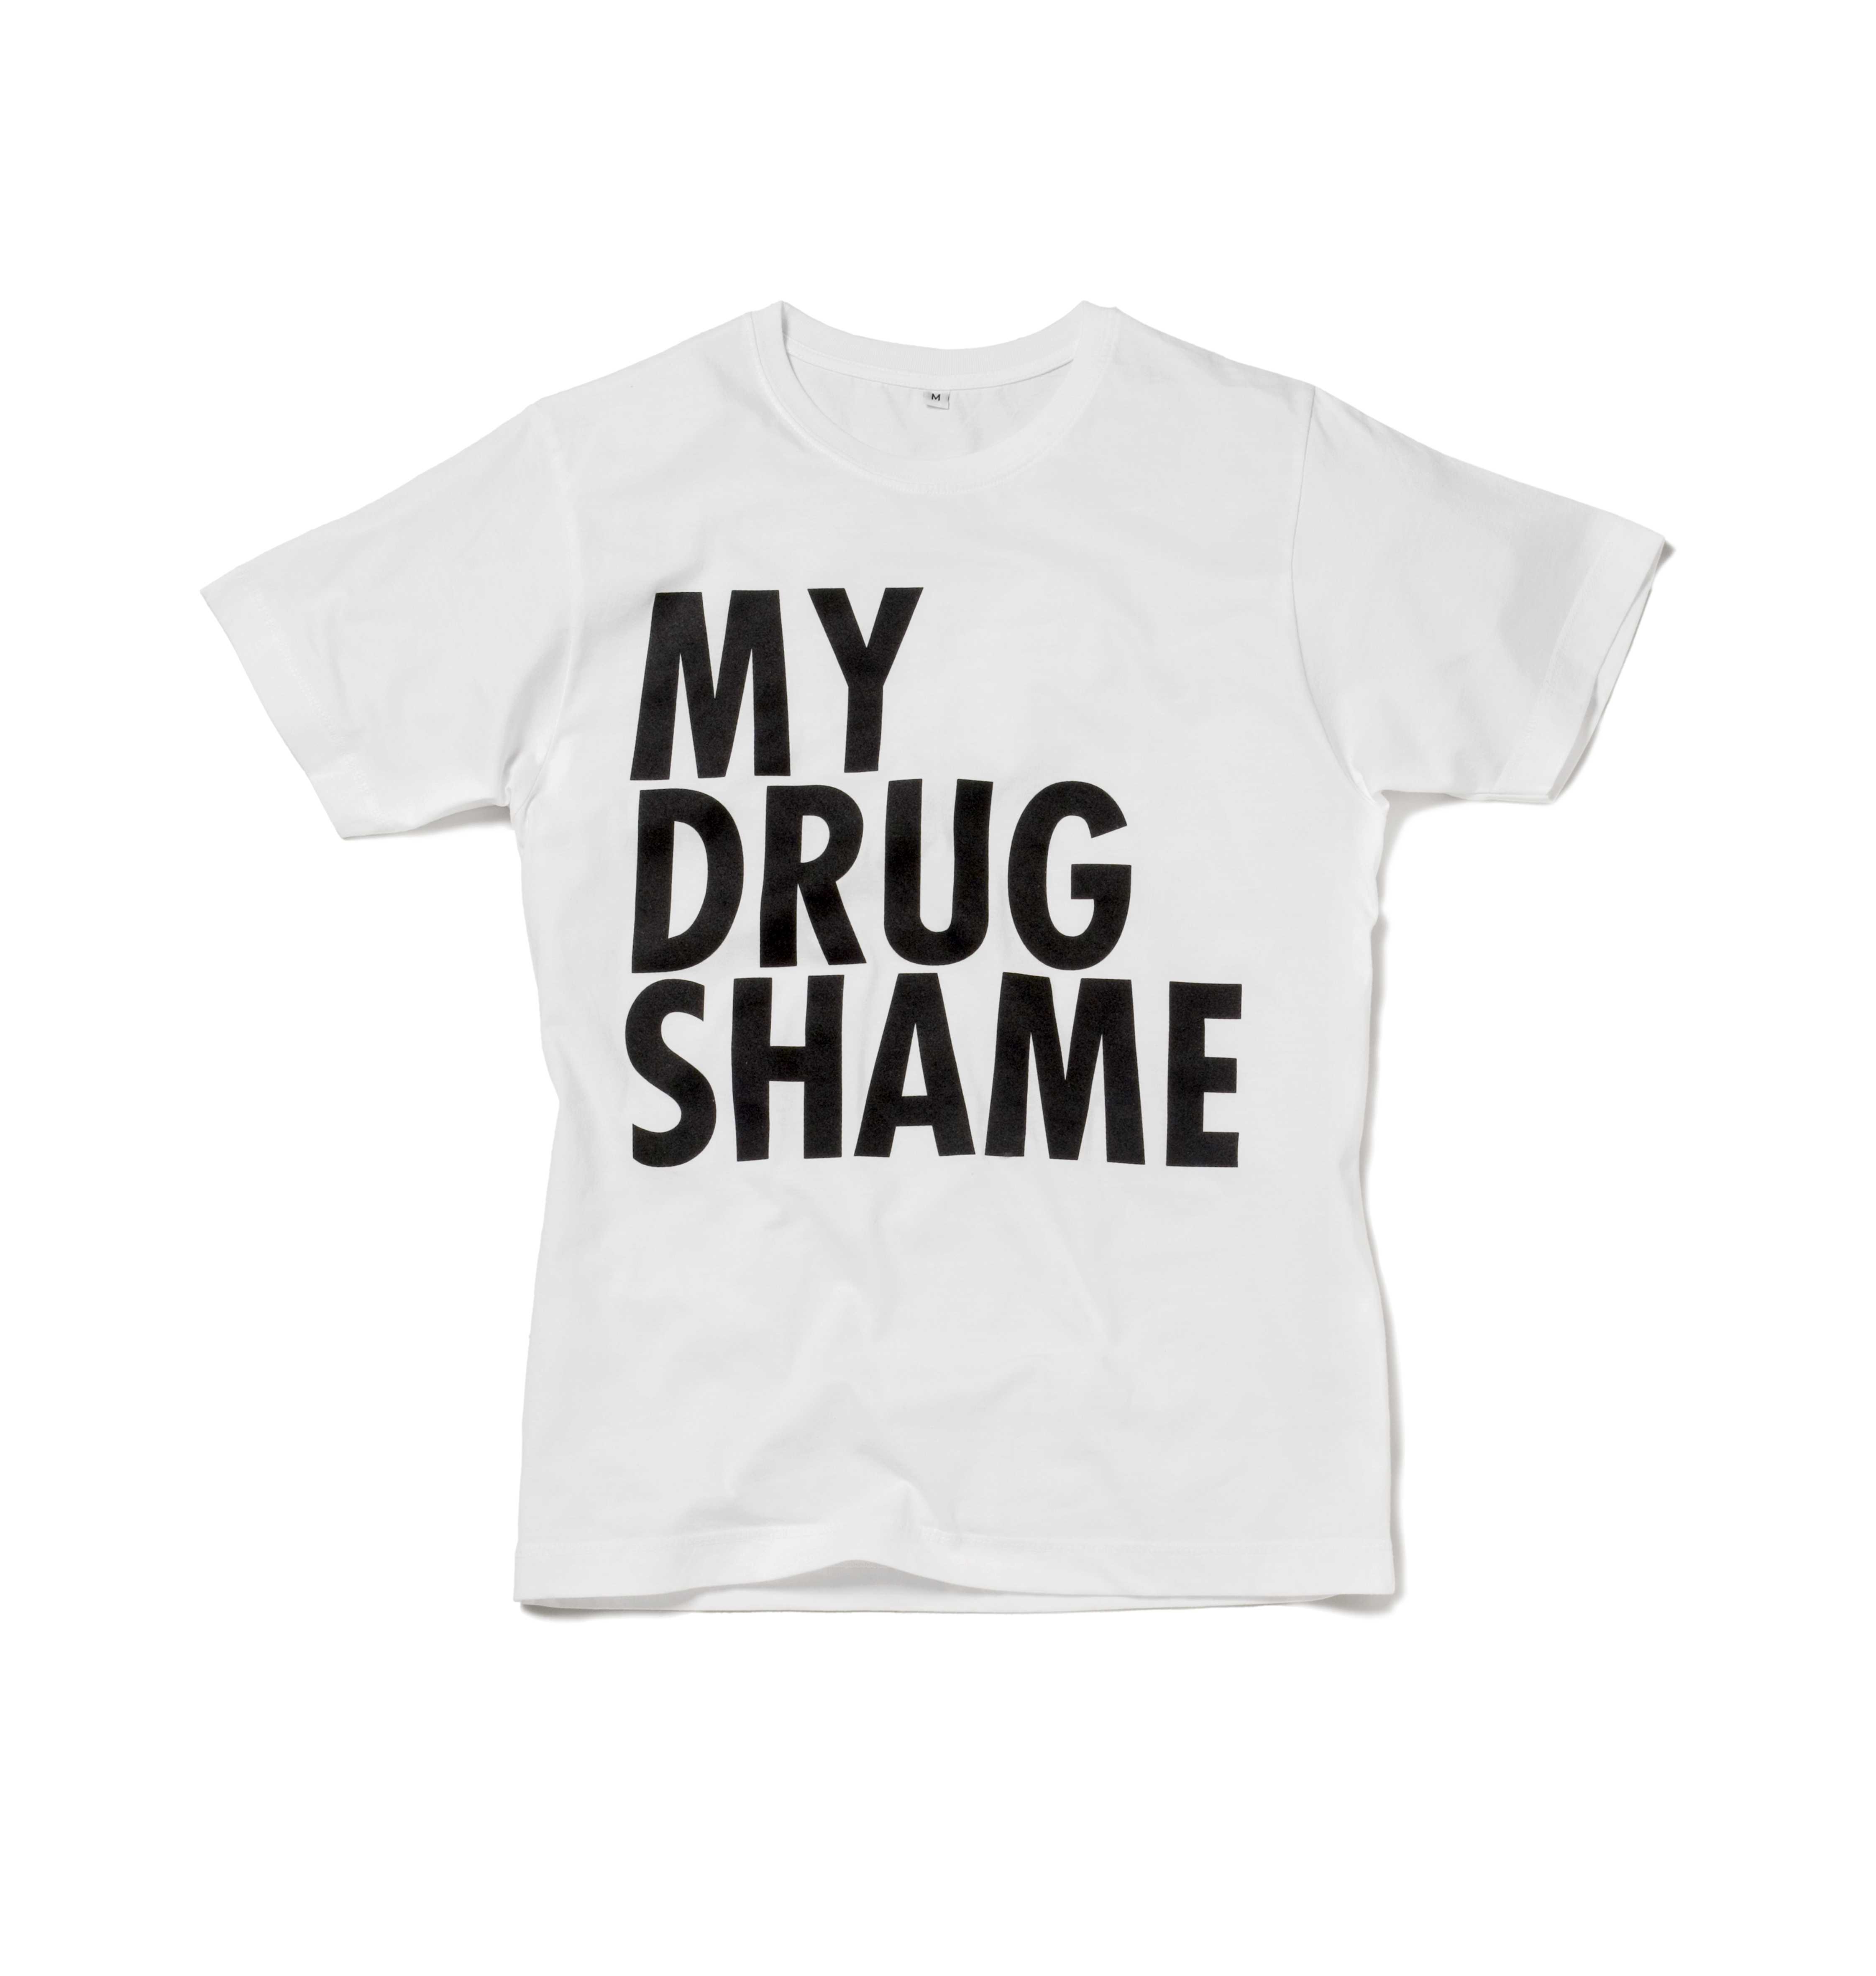 Jeremy Deller, My Drug Shame, 2016, Limited Edition T-shirt. WhiteBlack. Credit Graham Pearson FAD Magazine